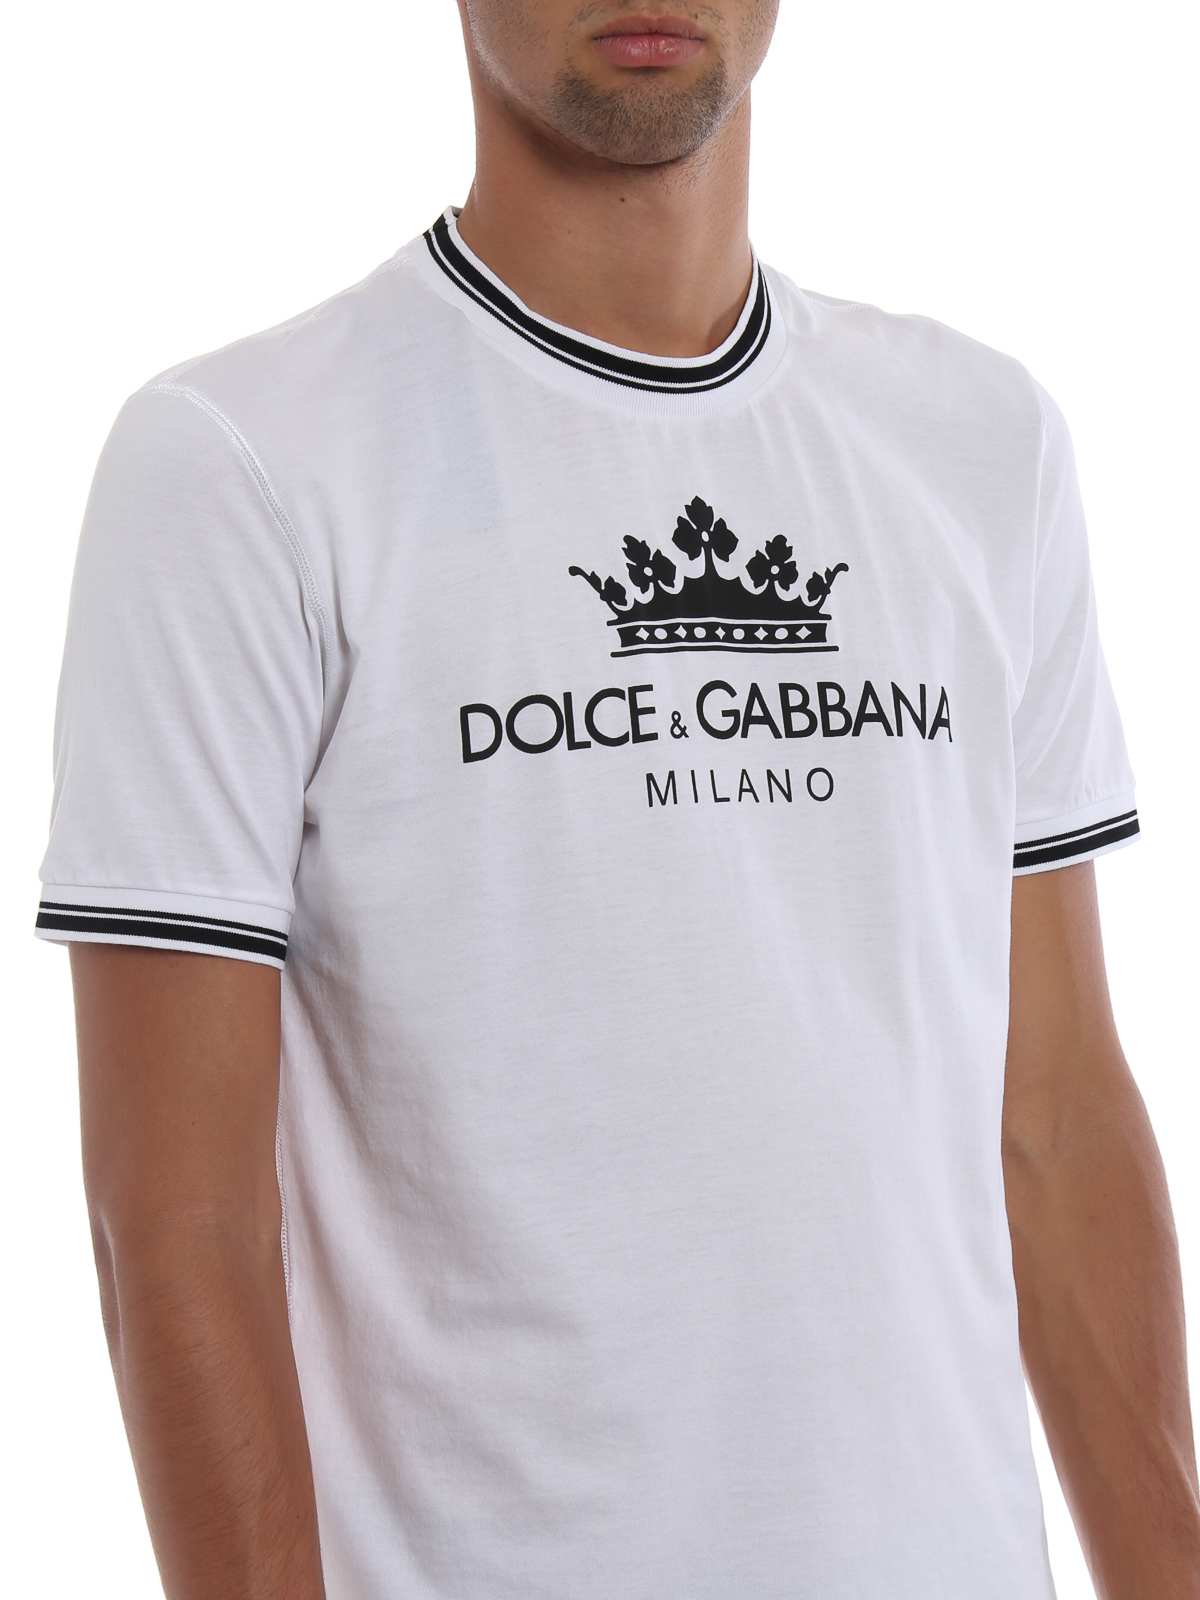 Camisetas Gabbana - Camiseta - #Dgmillennials - G8IR4TFU7EQW0800